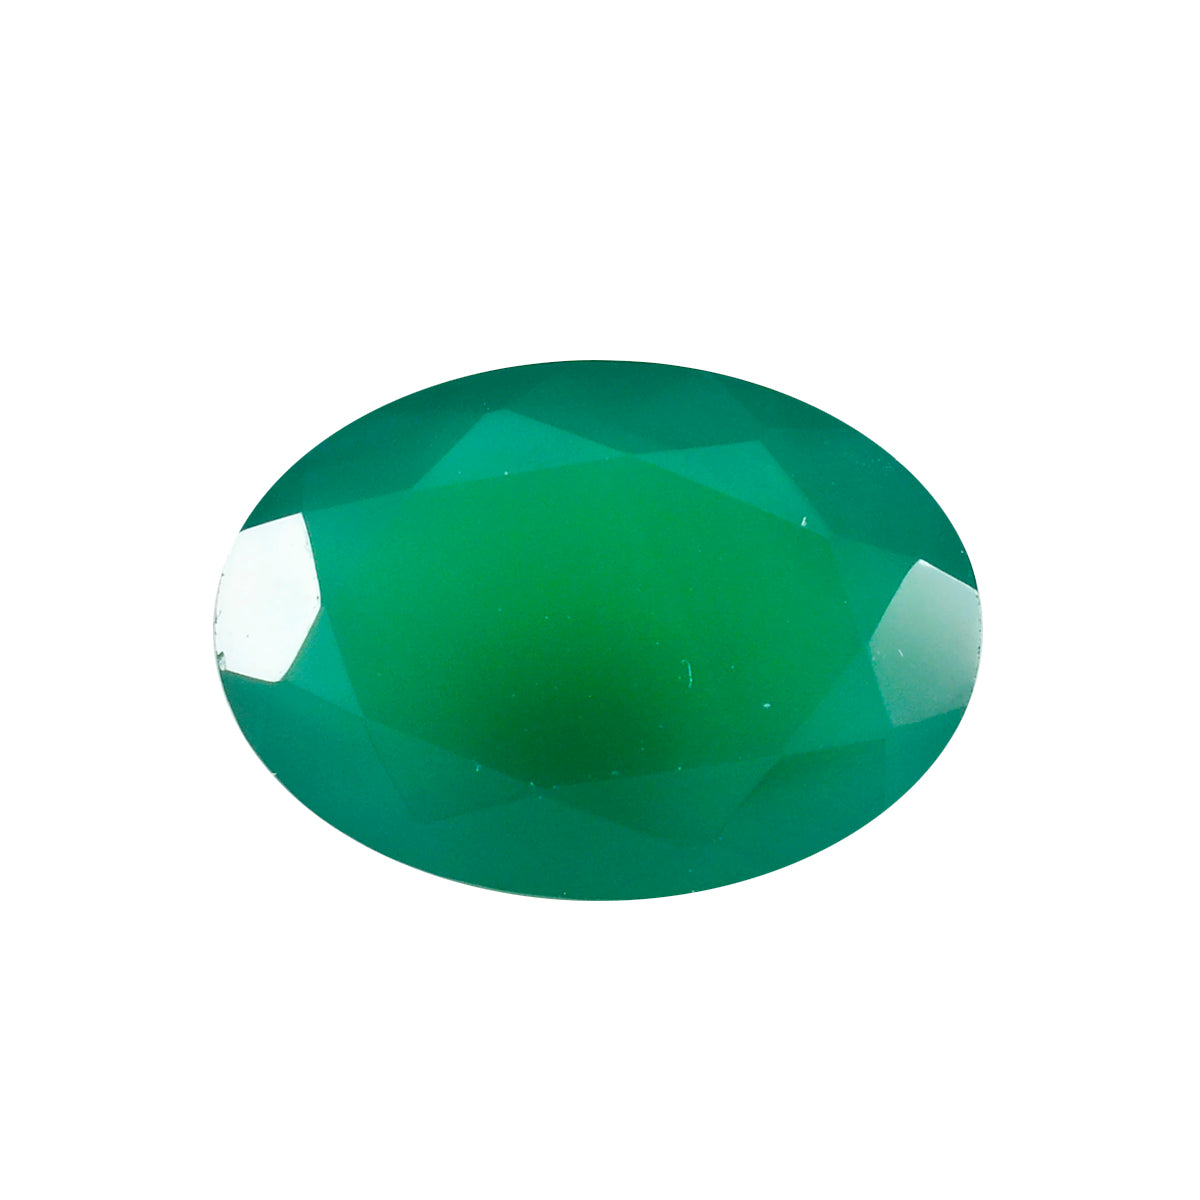 Riyogems 1PC Natural Green Onyx Faceted 10x14 mm Oval Shape wonderful Quality Loose Gem